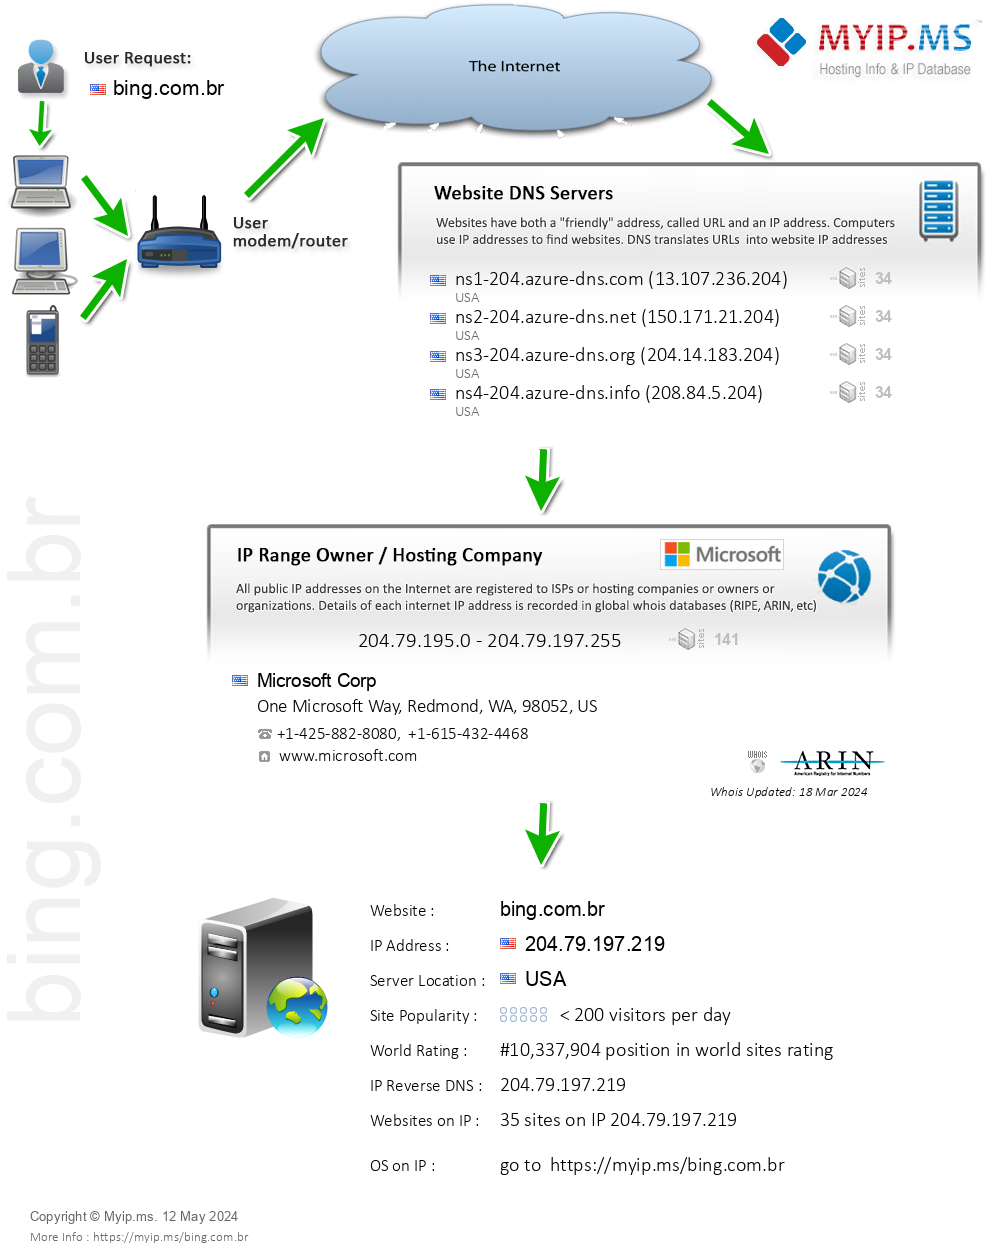 Bing.com.br - Website Hosting Visual IP Diagram